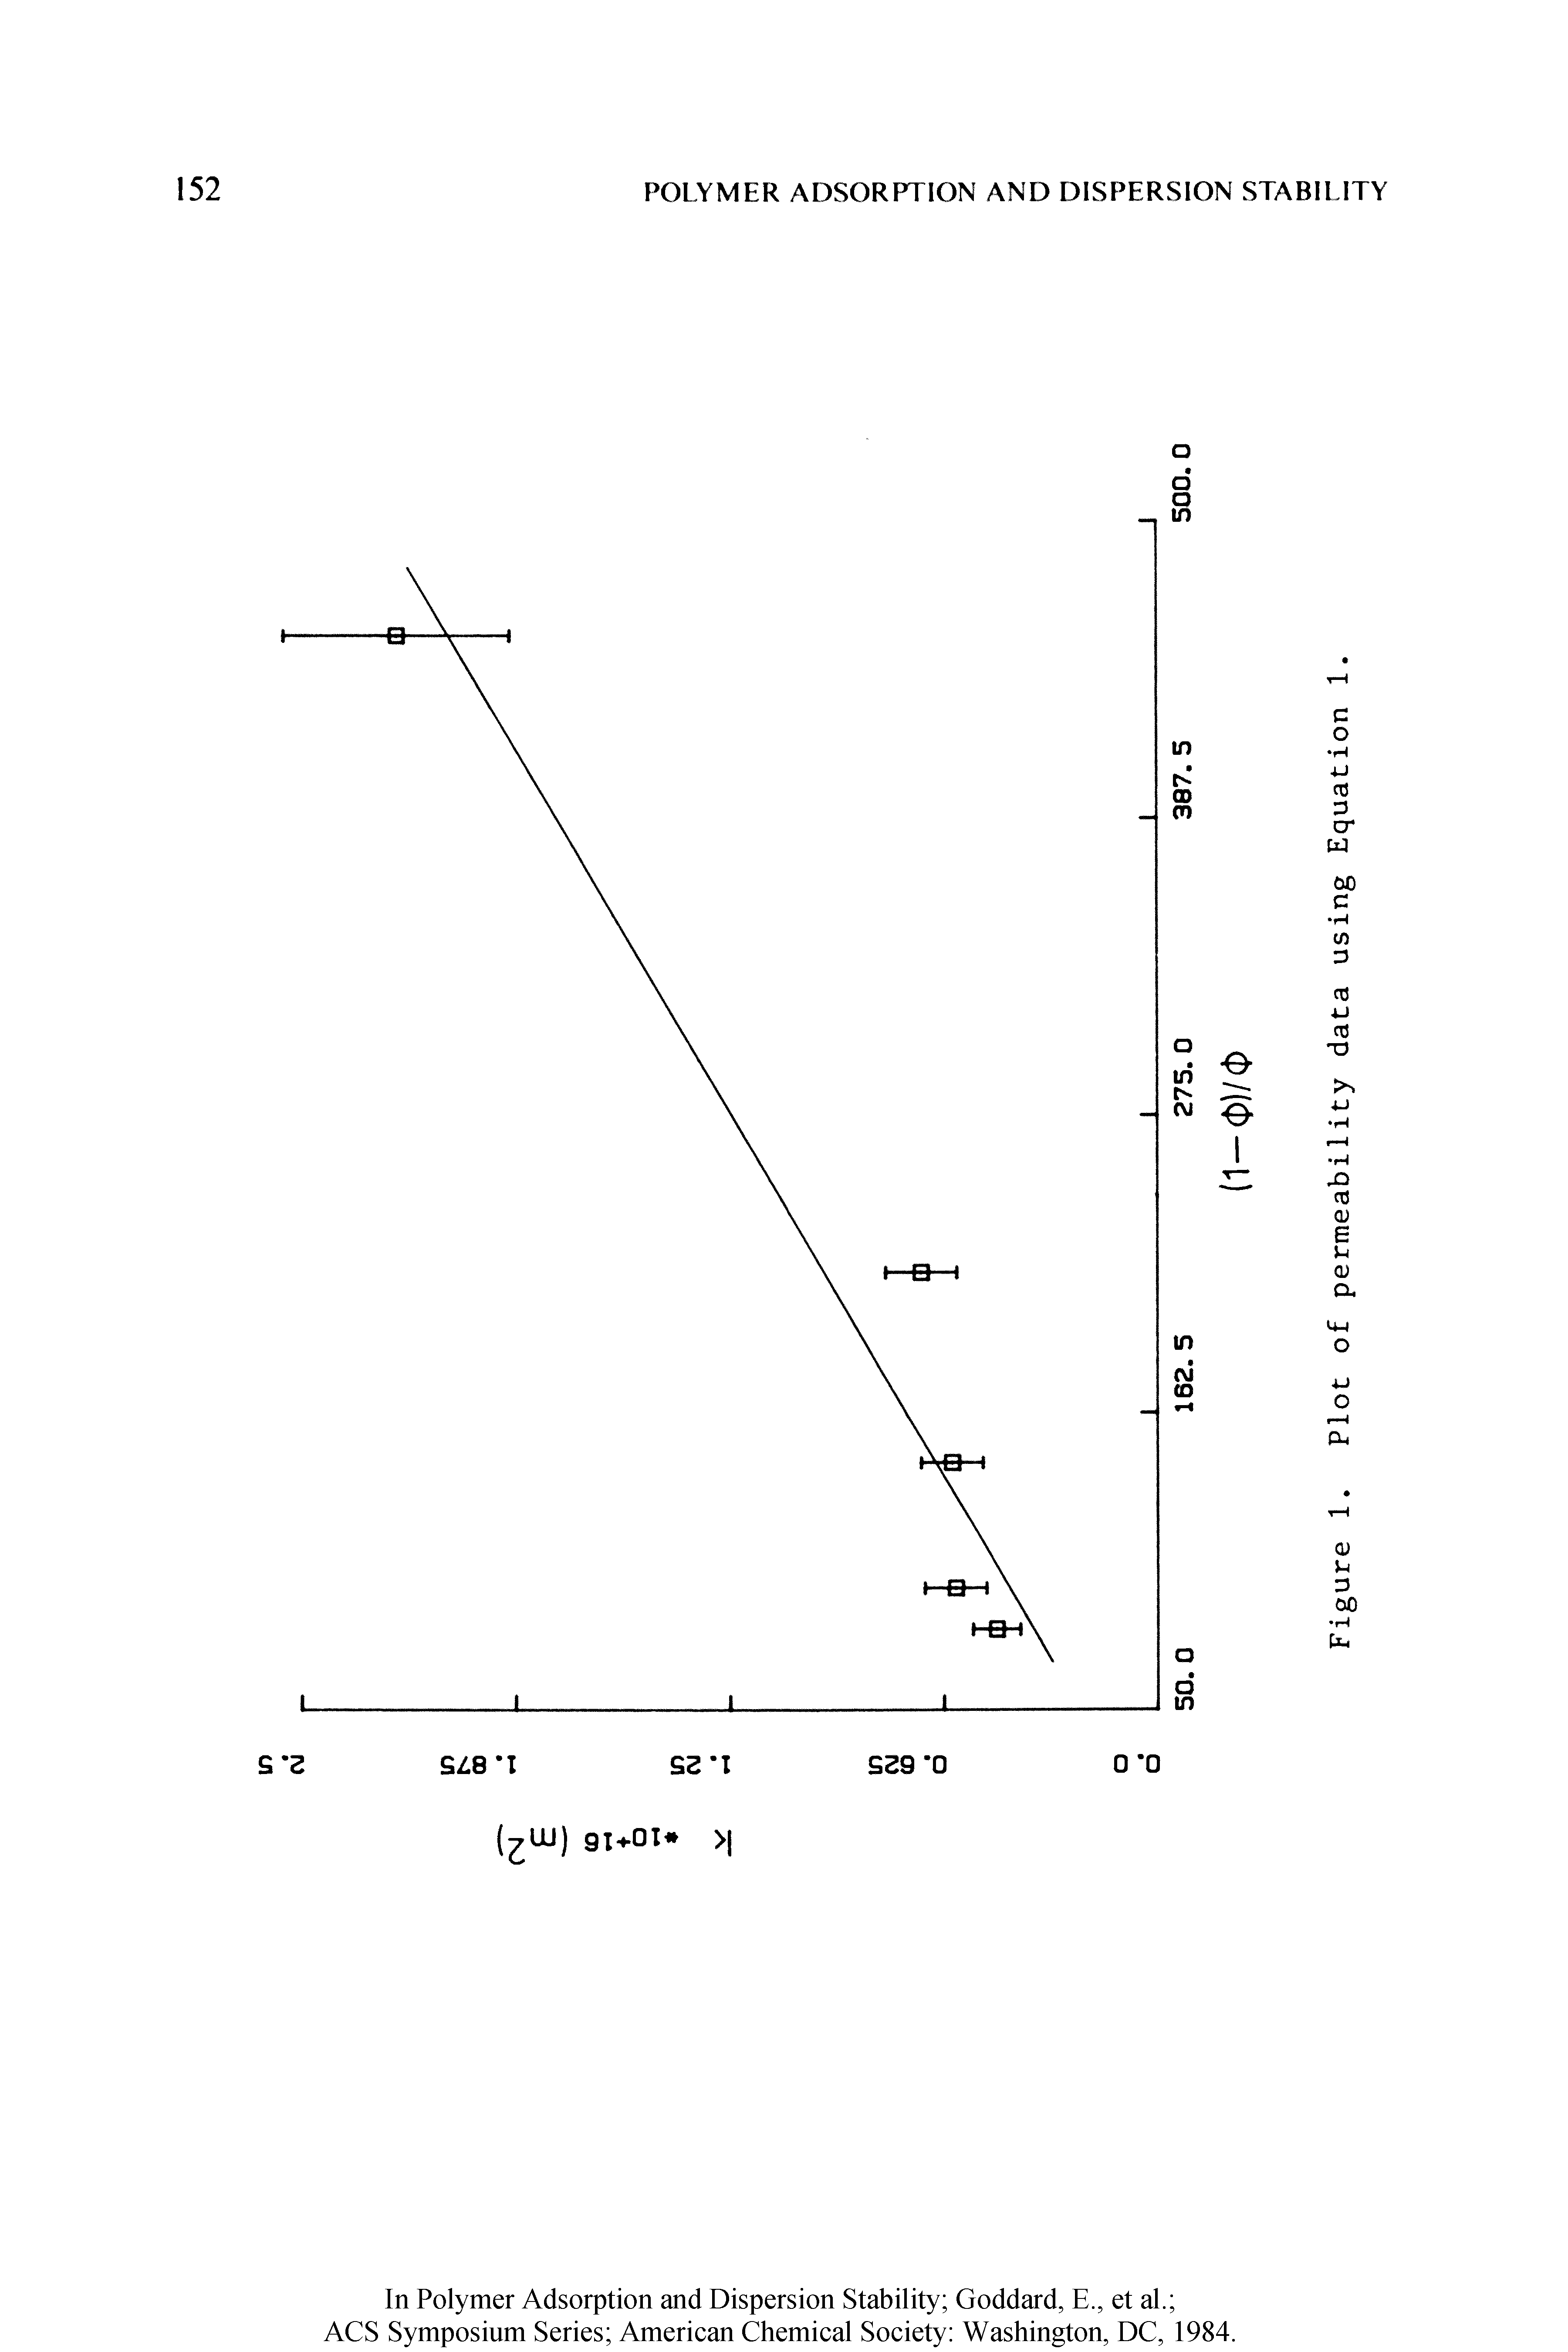 Figure 1. Plot of permeability data using Equation...